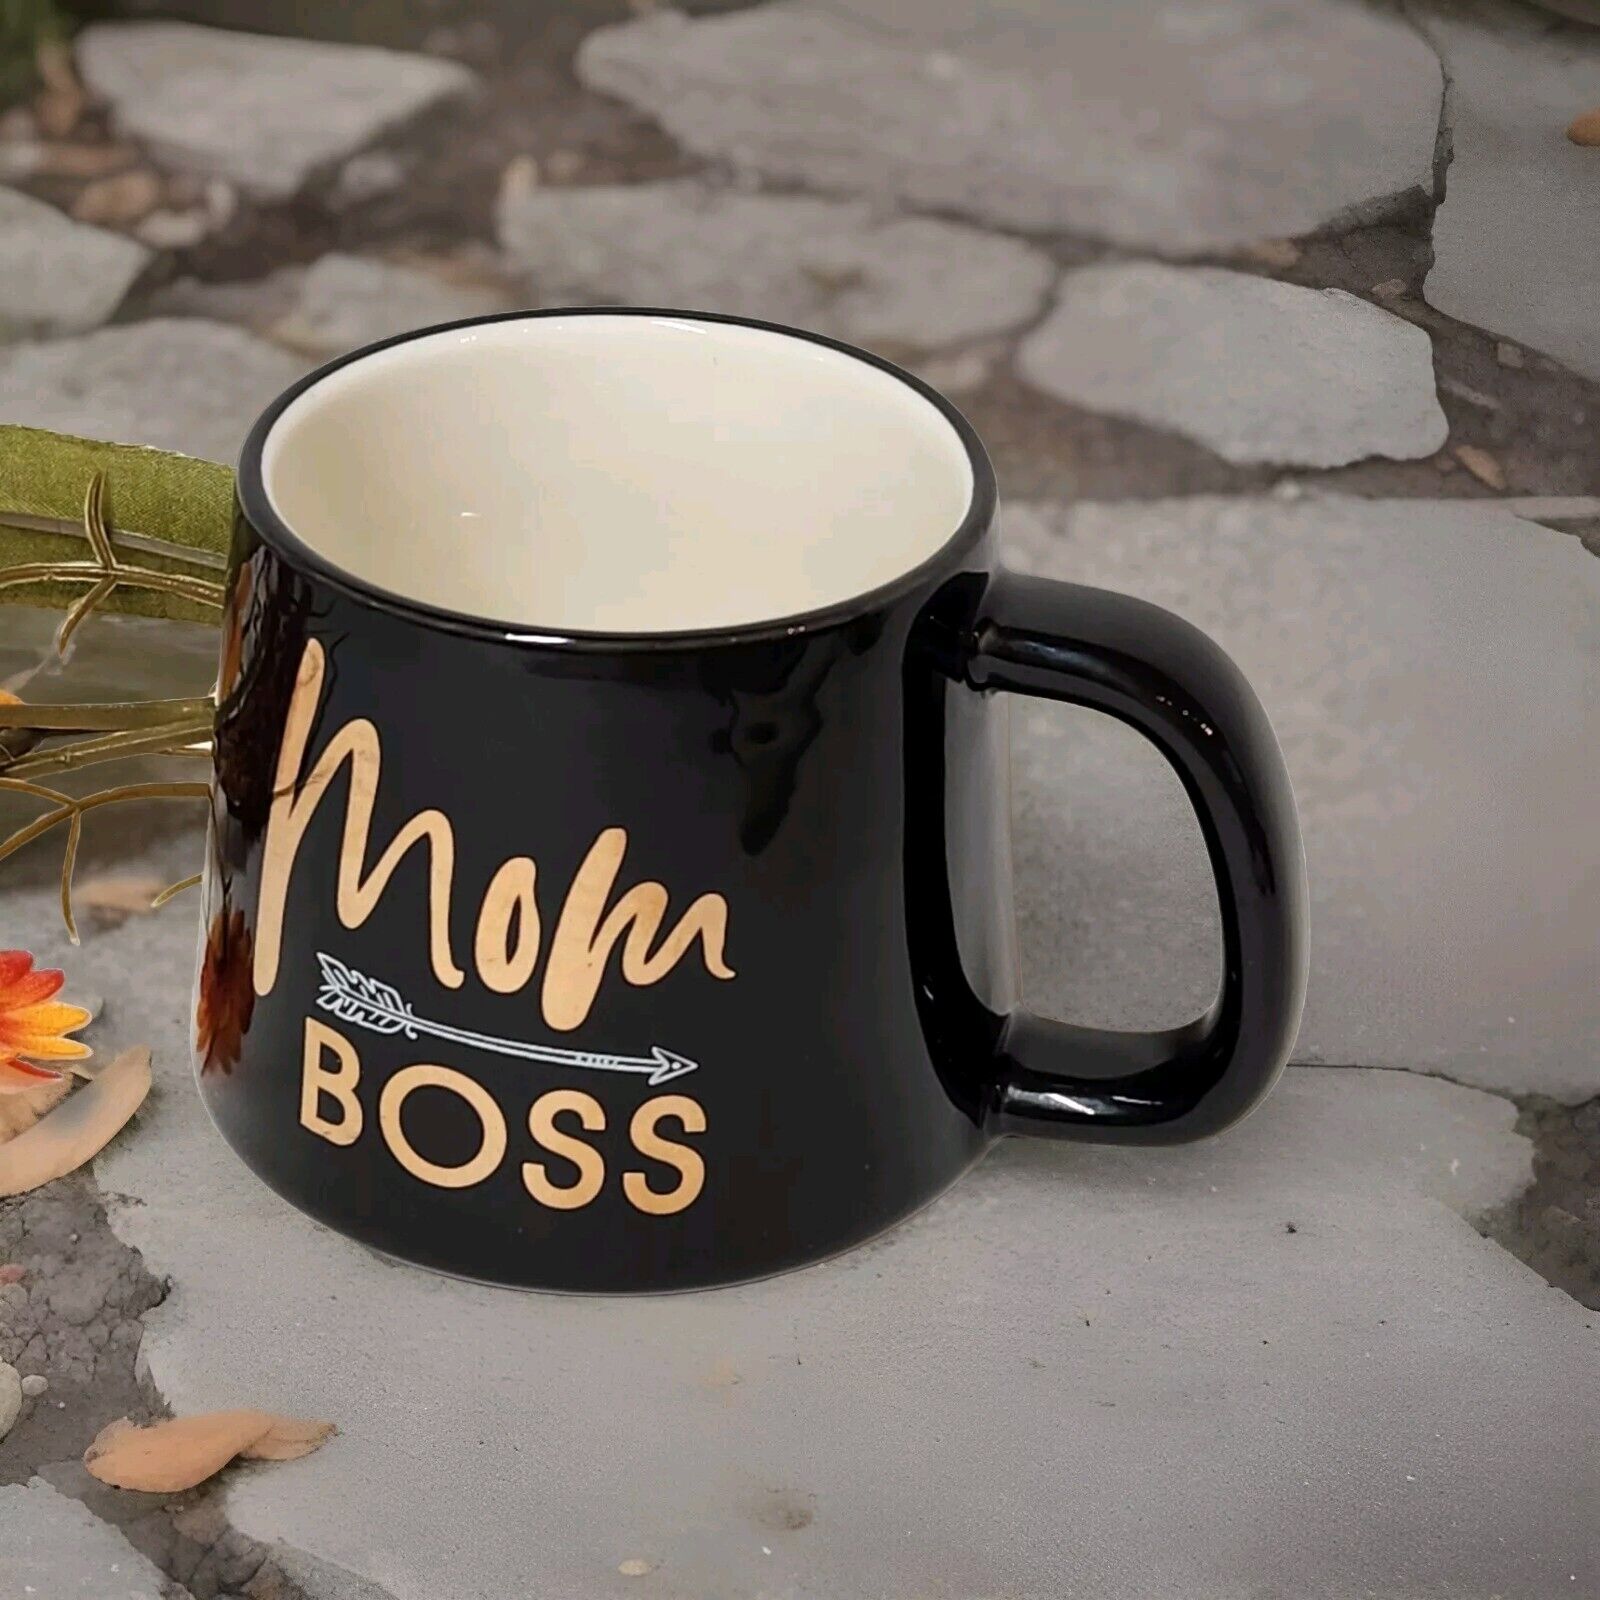  Mom Boss 12 oz Coffee Mug Tea Cup Black Gold Metallic Ceramic Gift 